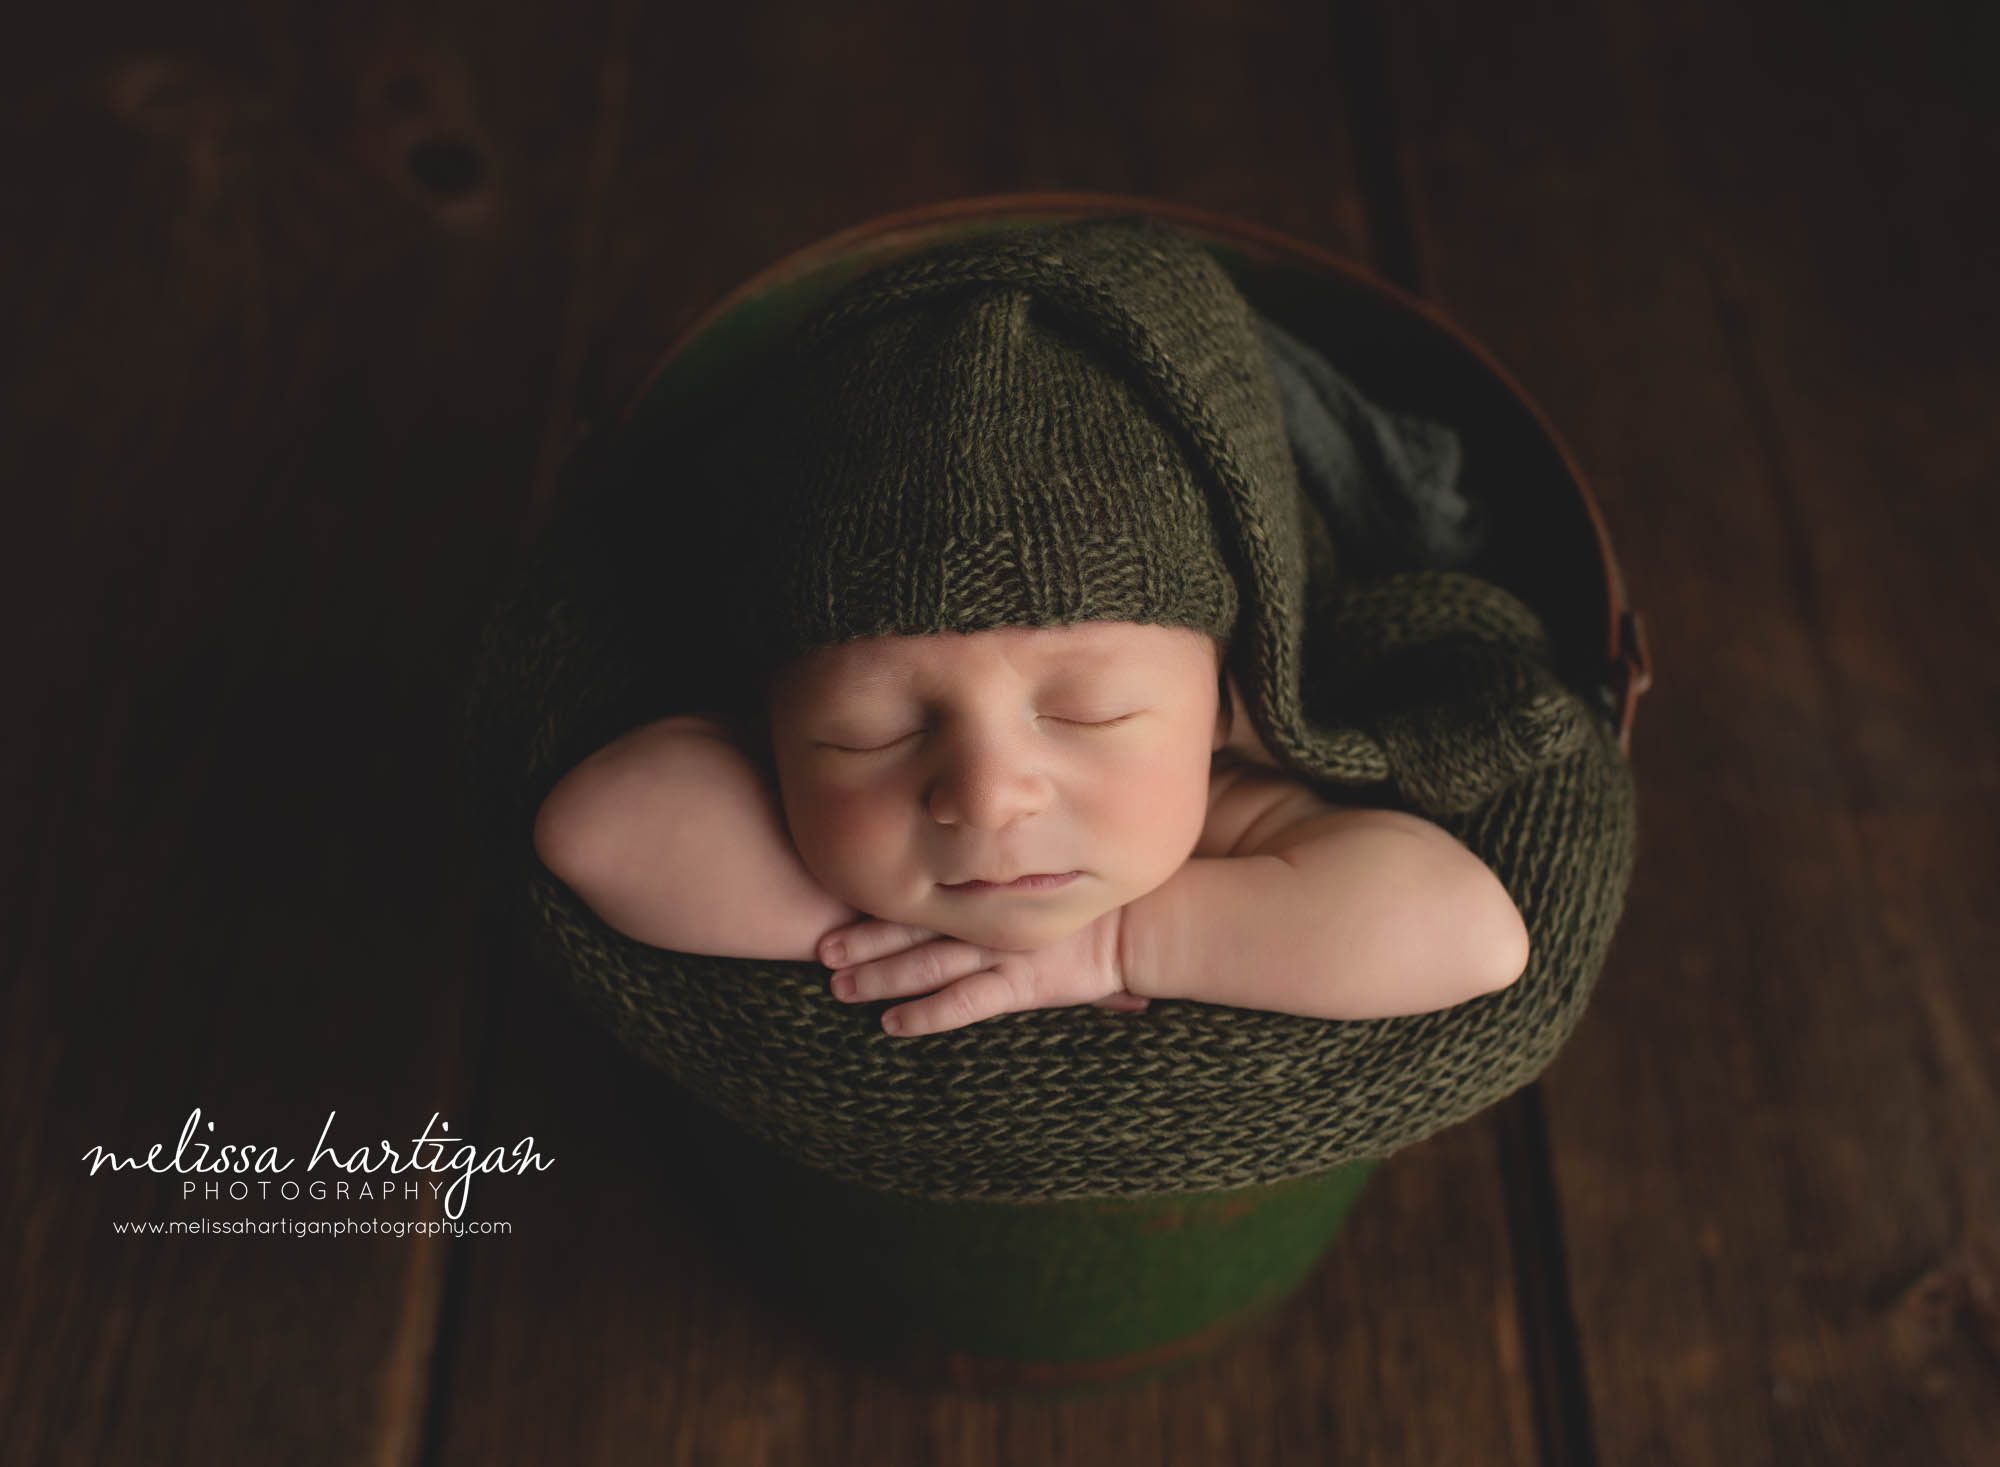 newborn boy posed in bucket with green knitted sleepy cap